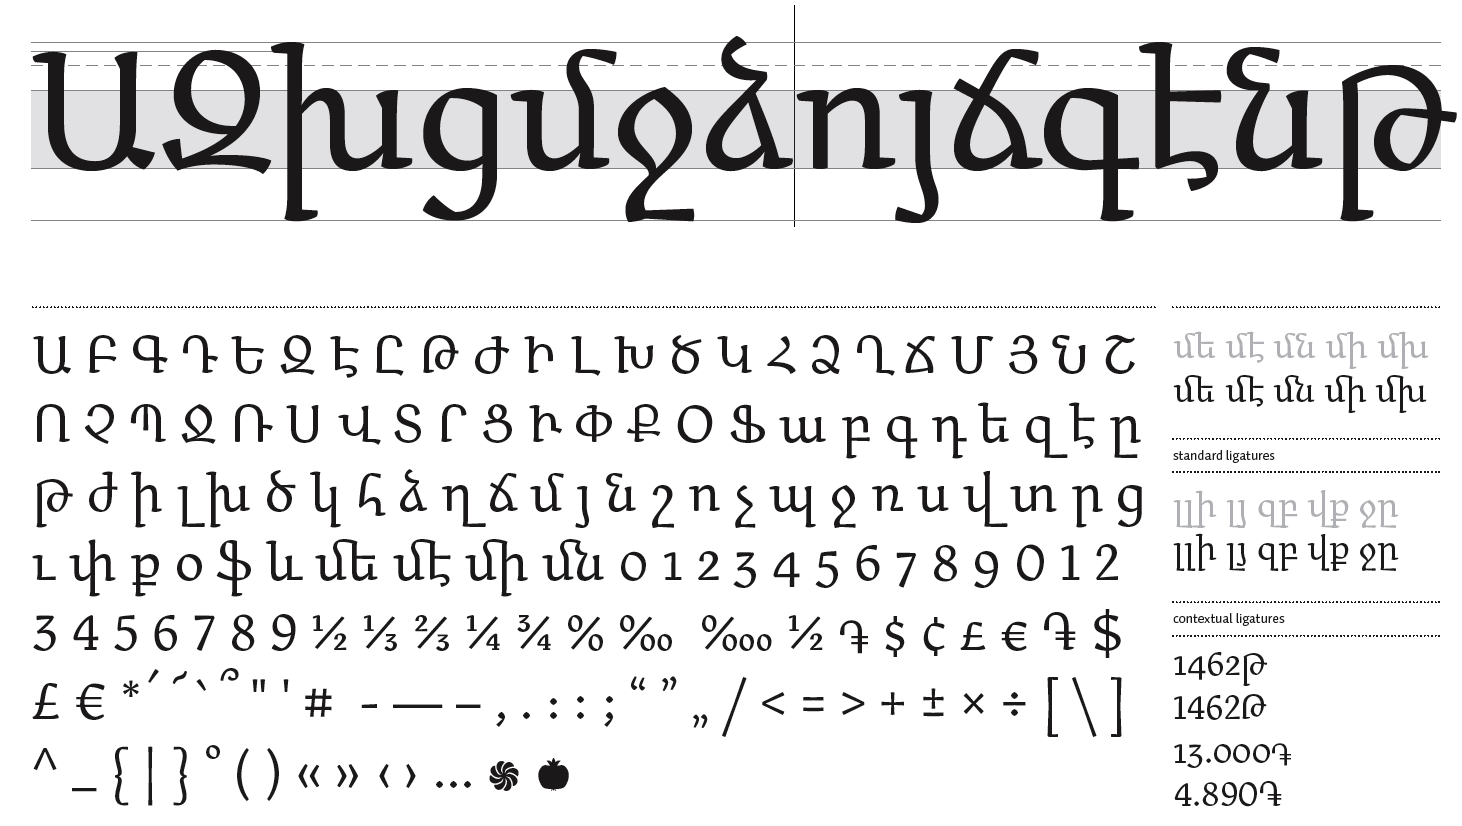 armenian font for photoshop